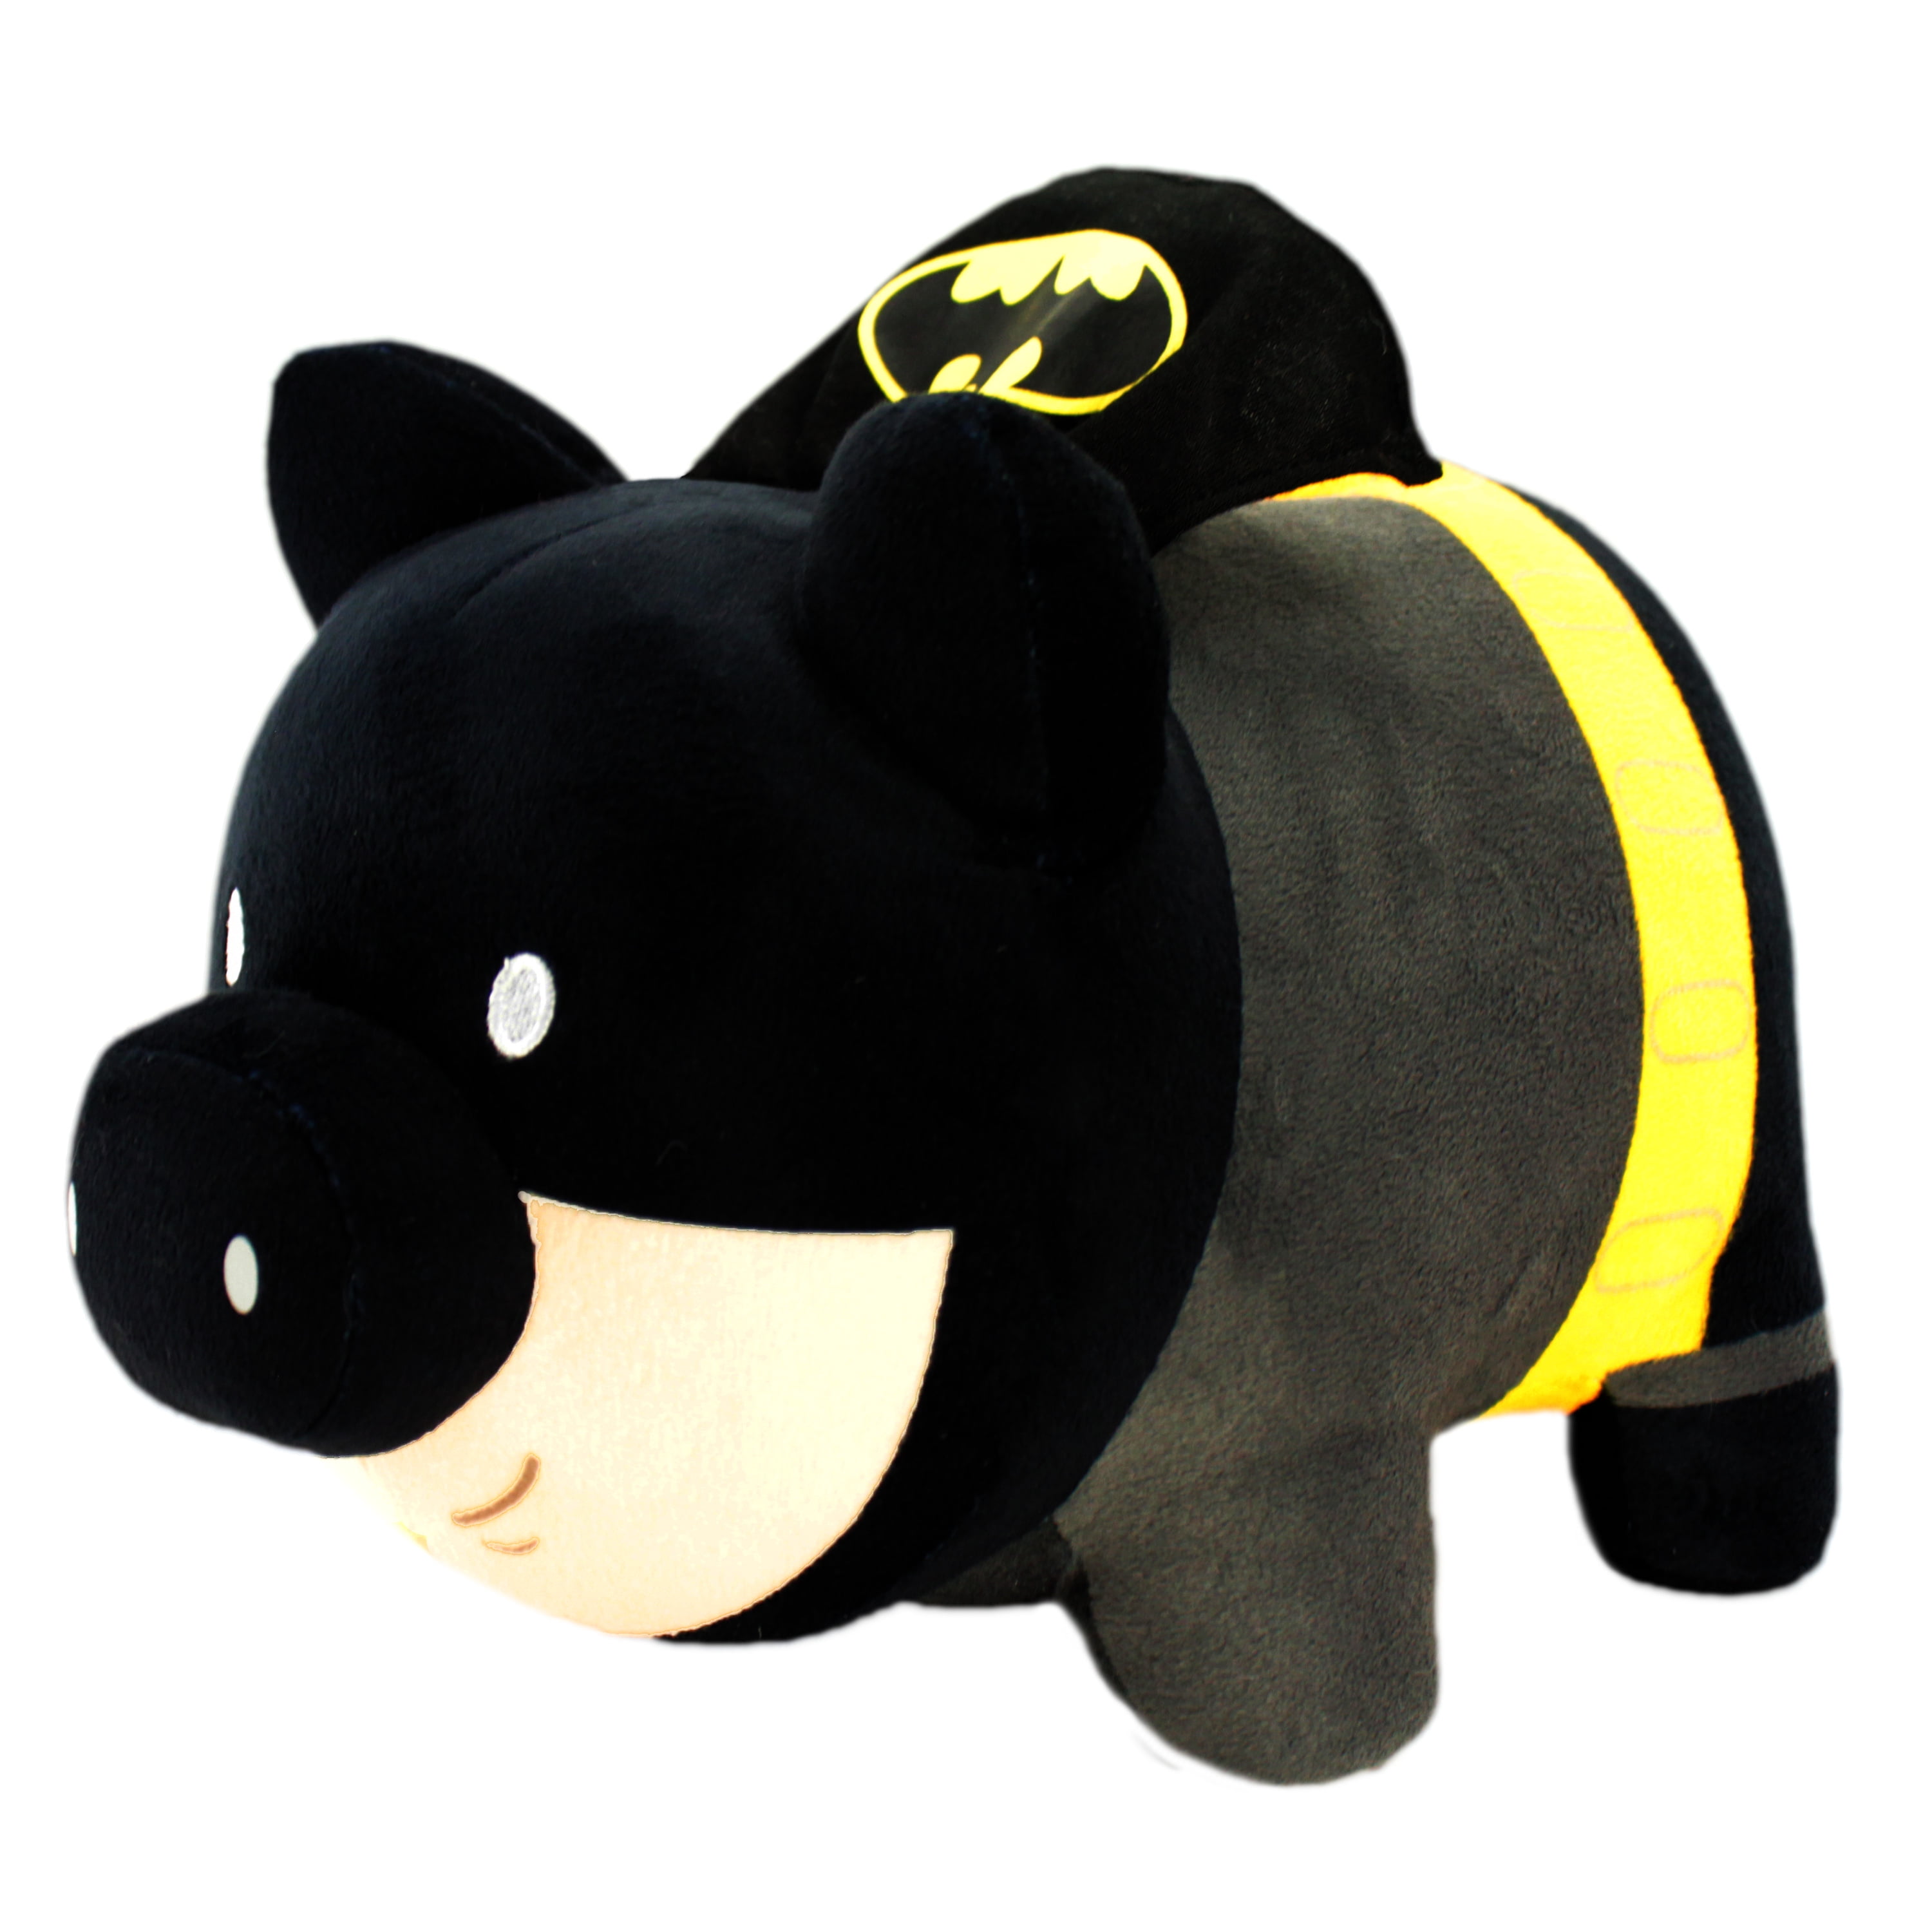 DC COMICS BATMAN Plush Bank Justice League Toy Stuffed Animal NEW with Tags RARE 